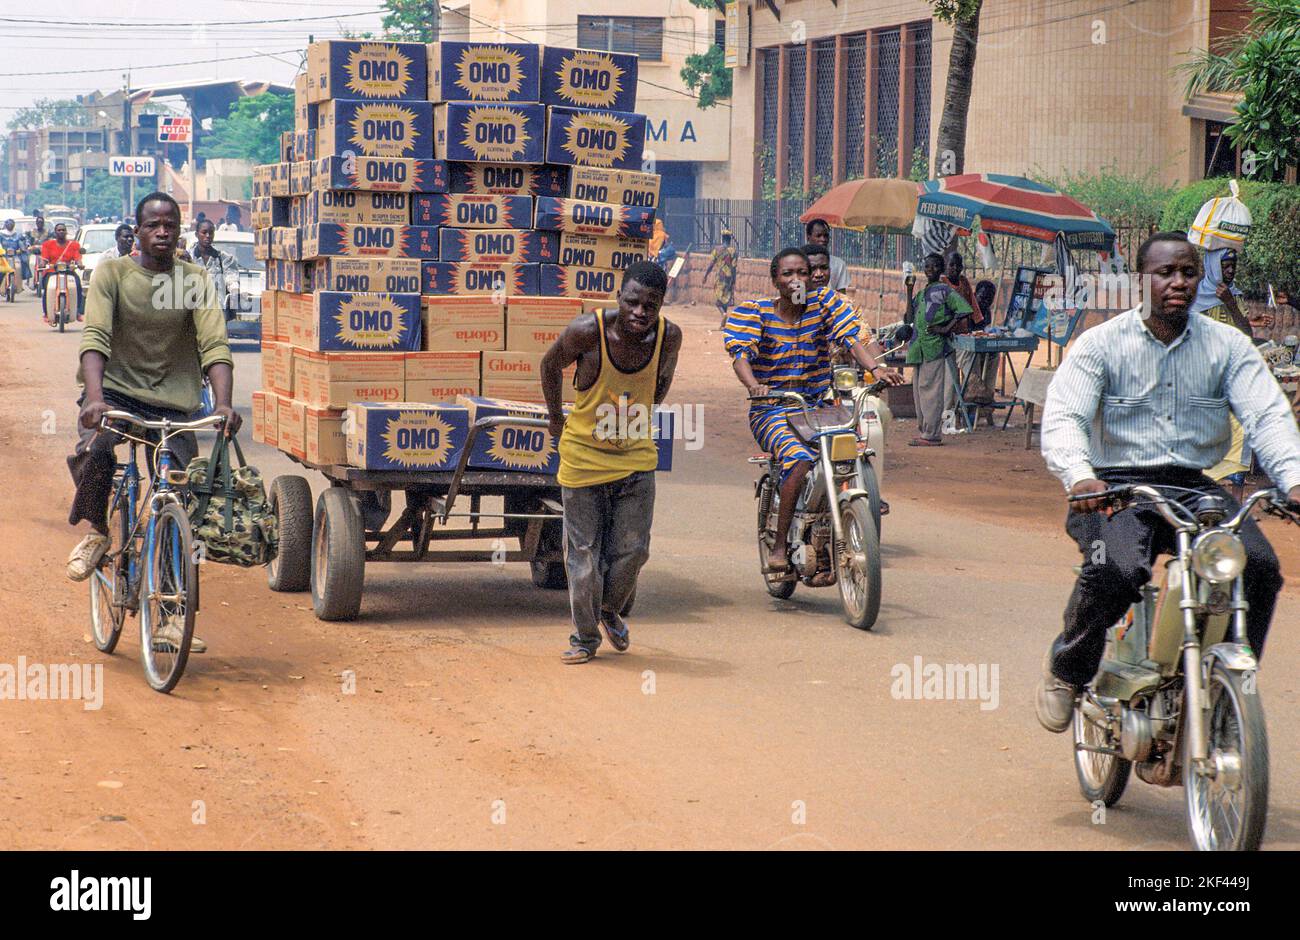 Burkina Faso, Ouagadougou.  A man is transporting a cargo of Omo washing-powder. Stock Photo